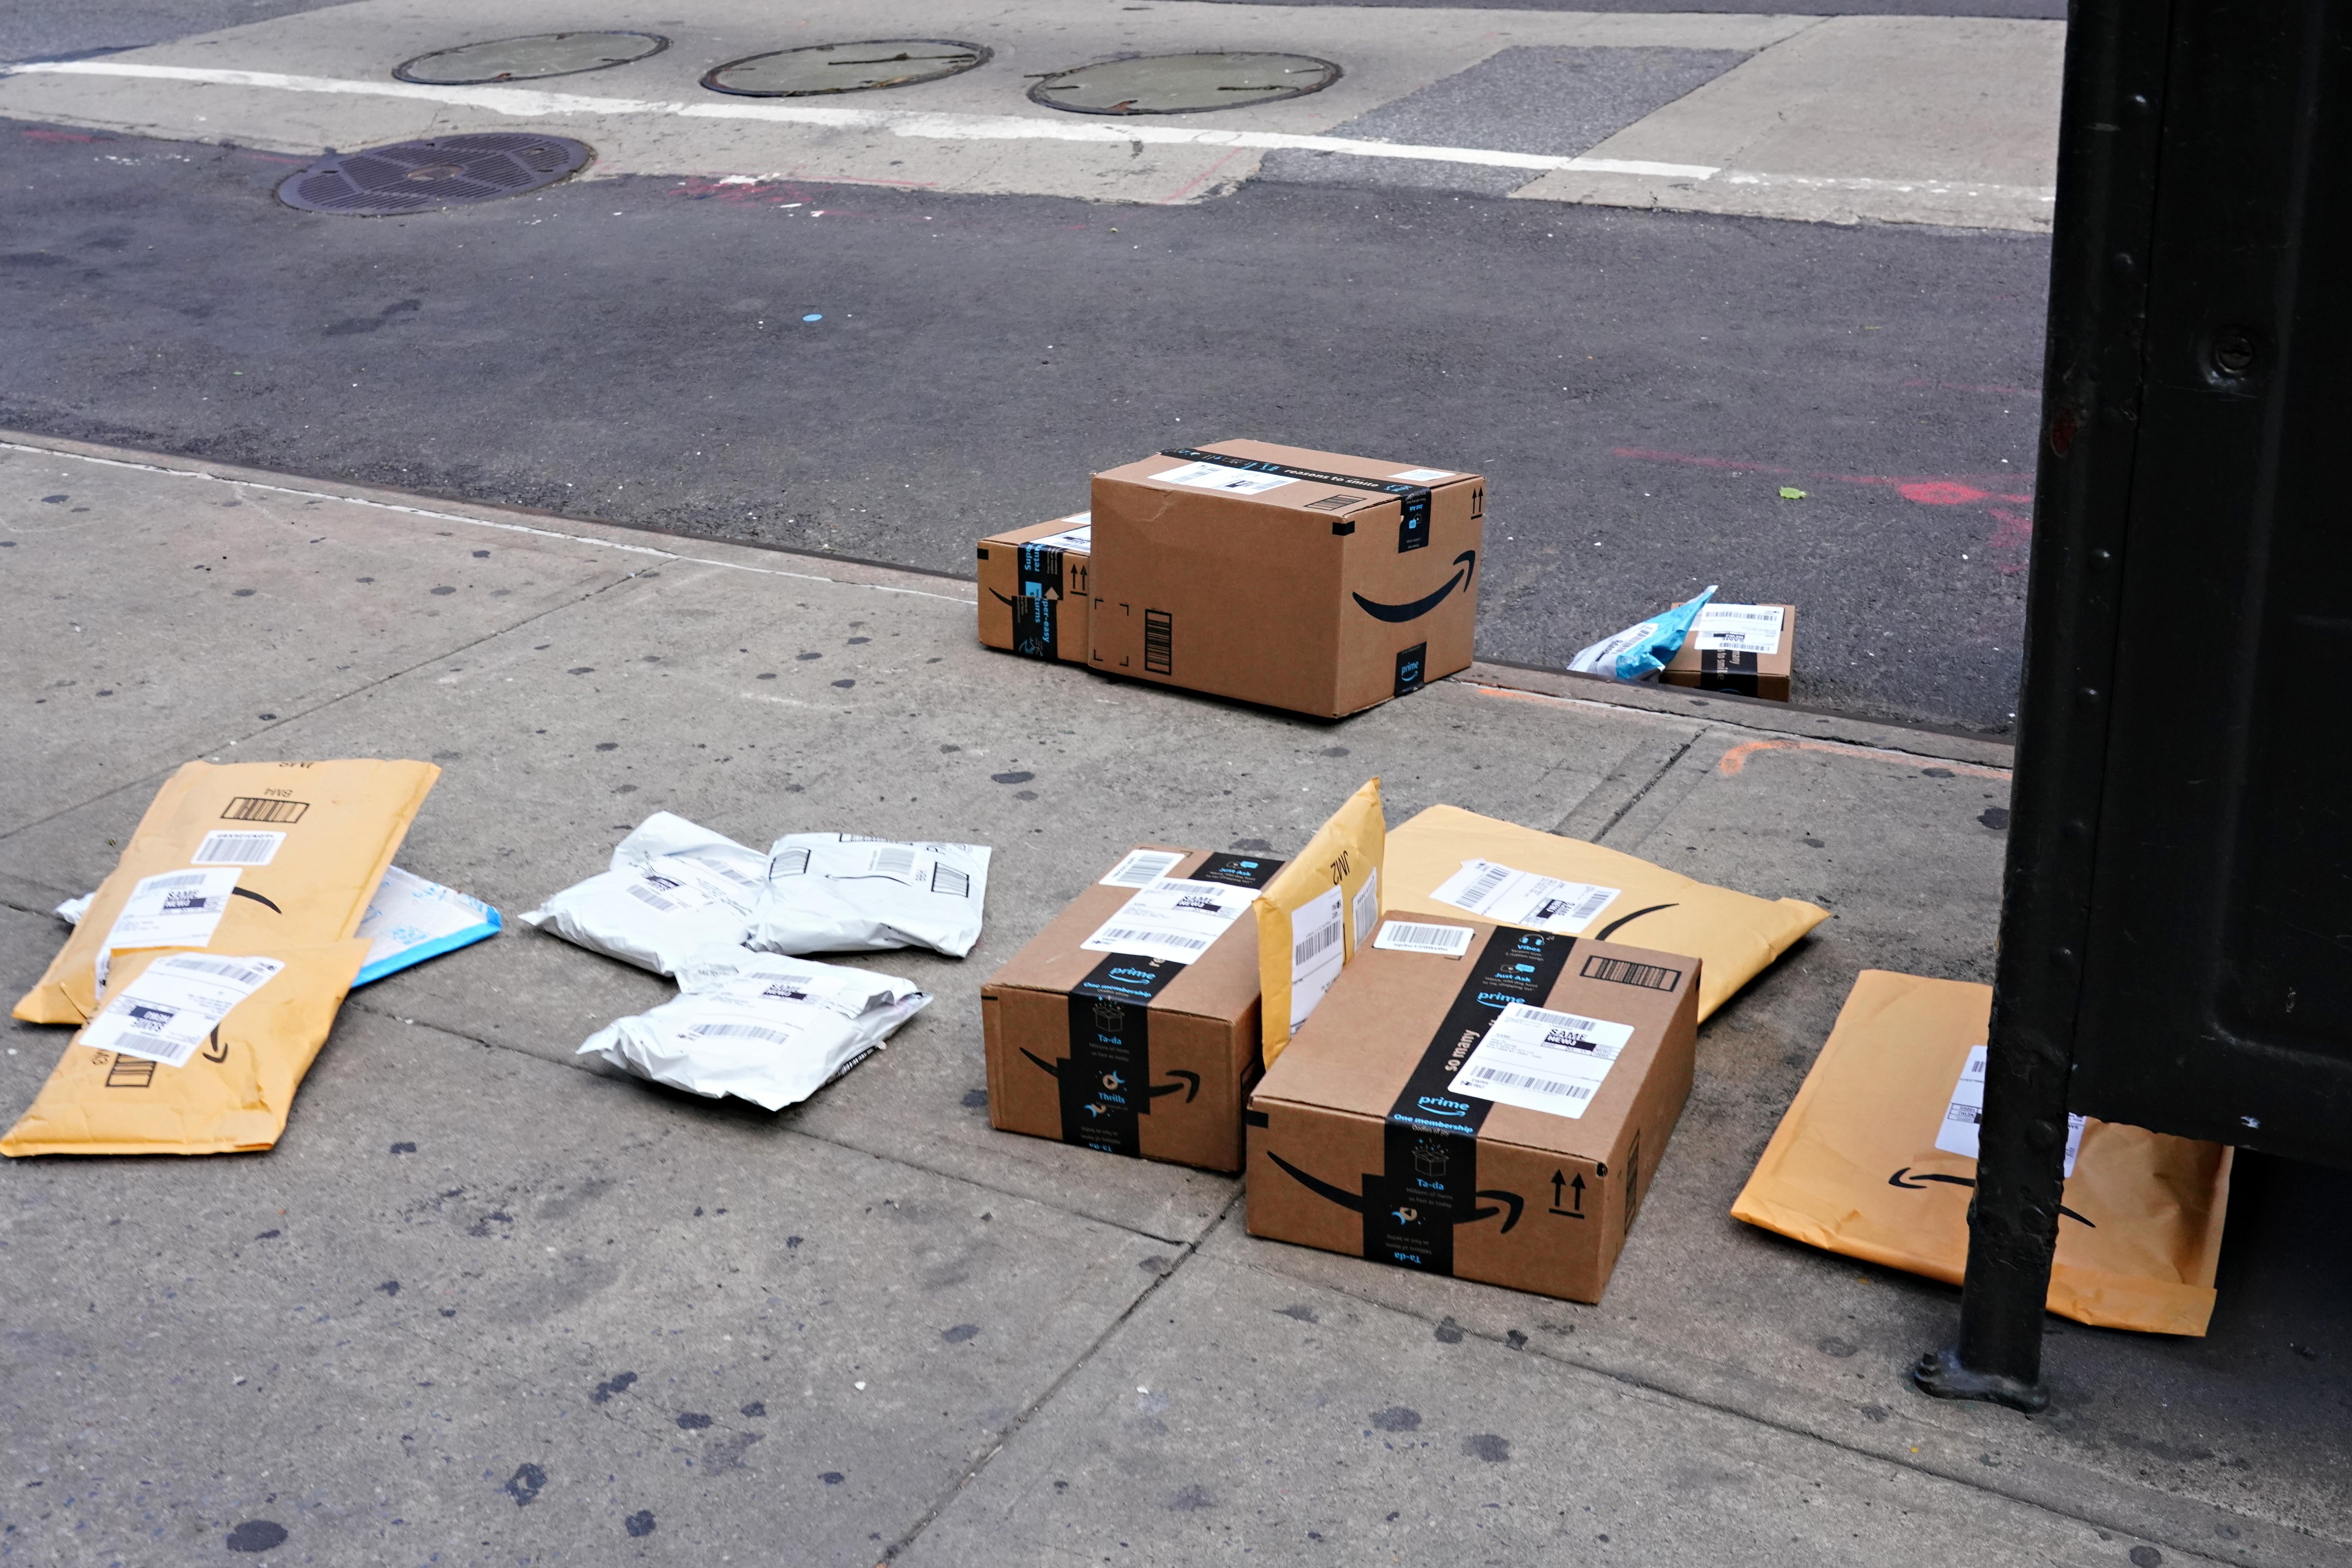 Amazon packages strewn across a city sidewalk.